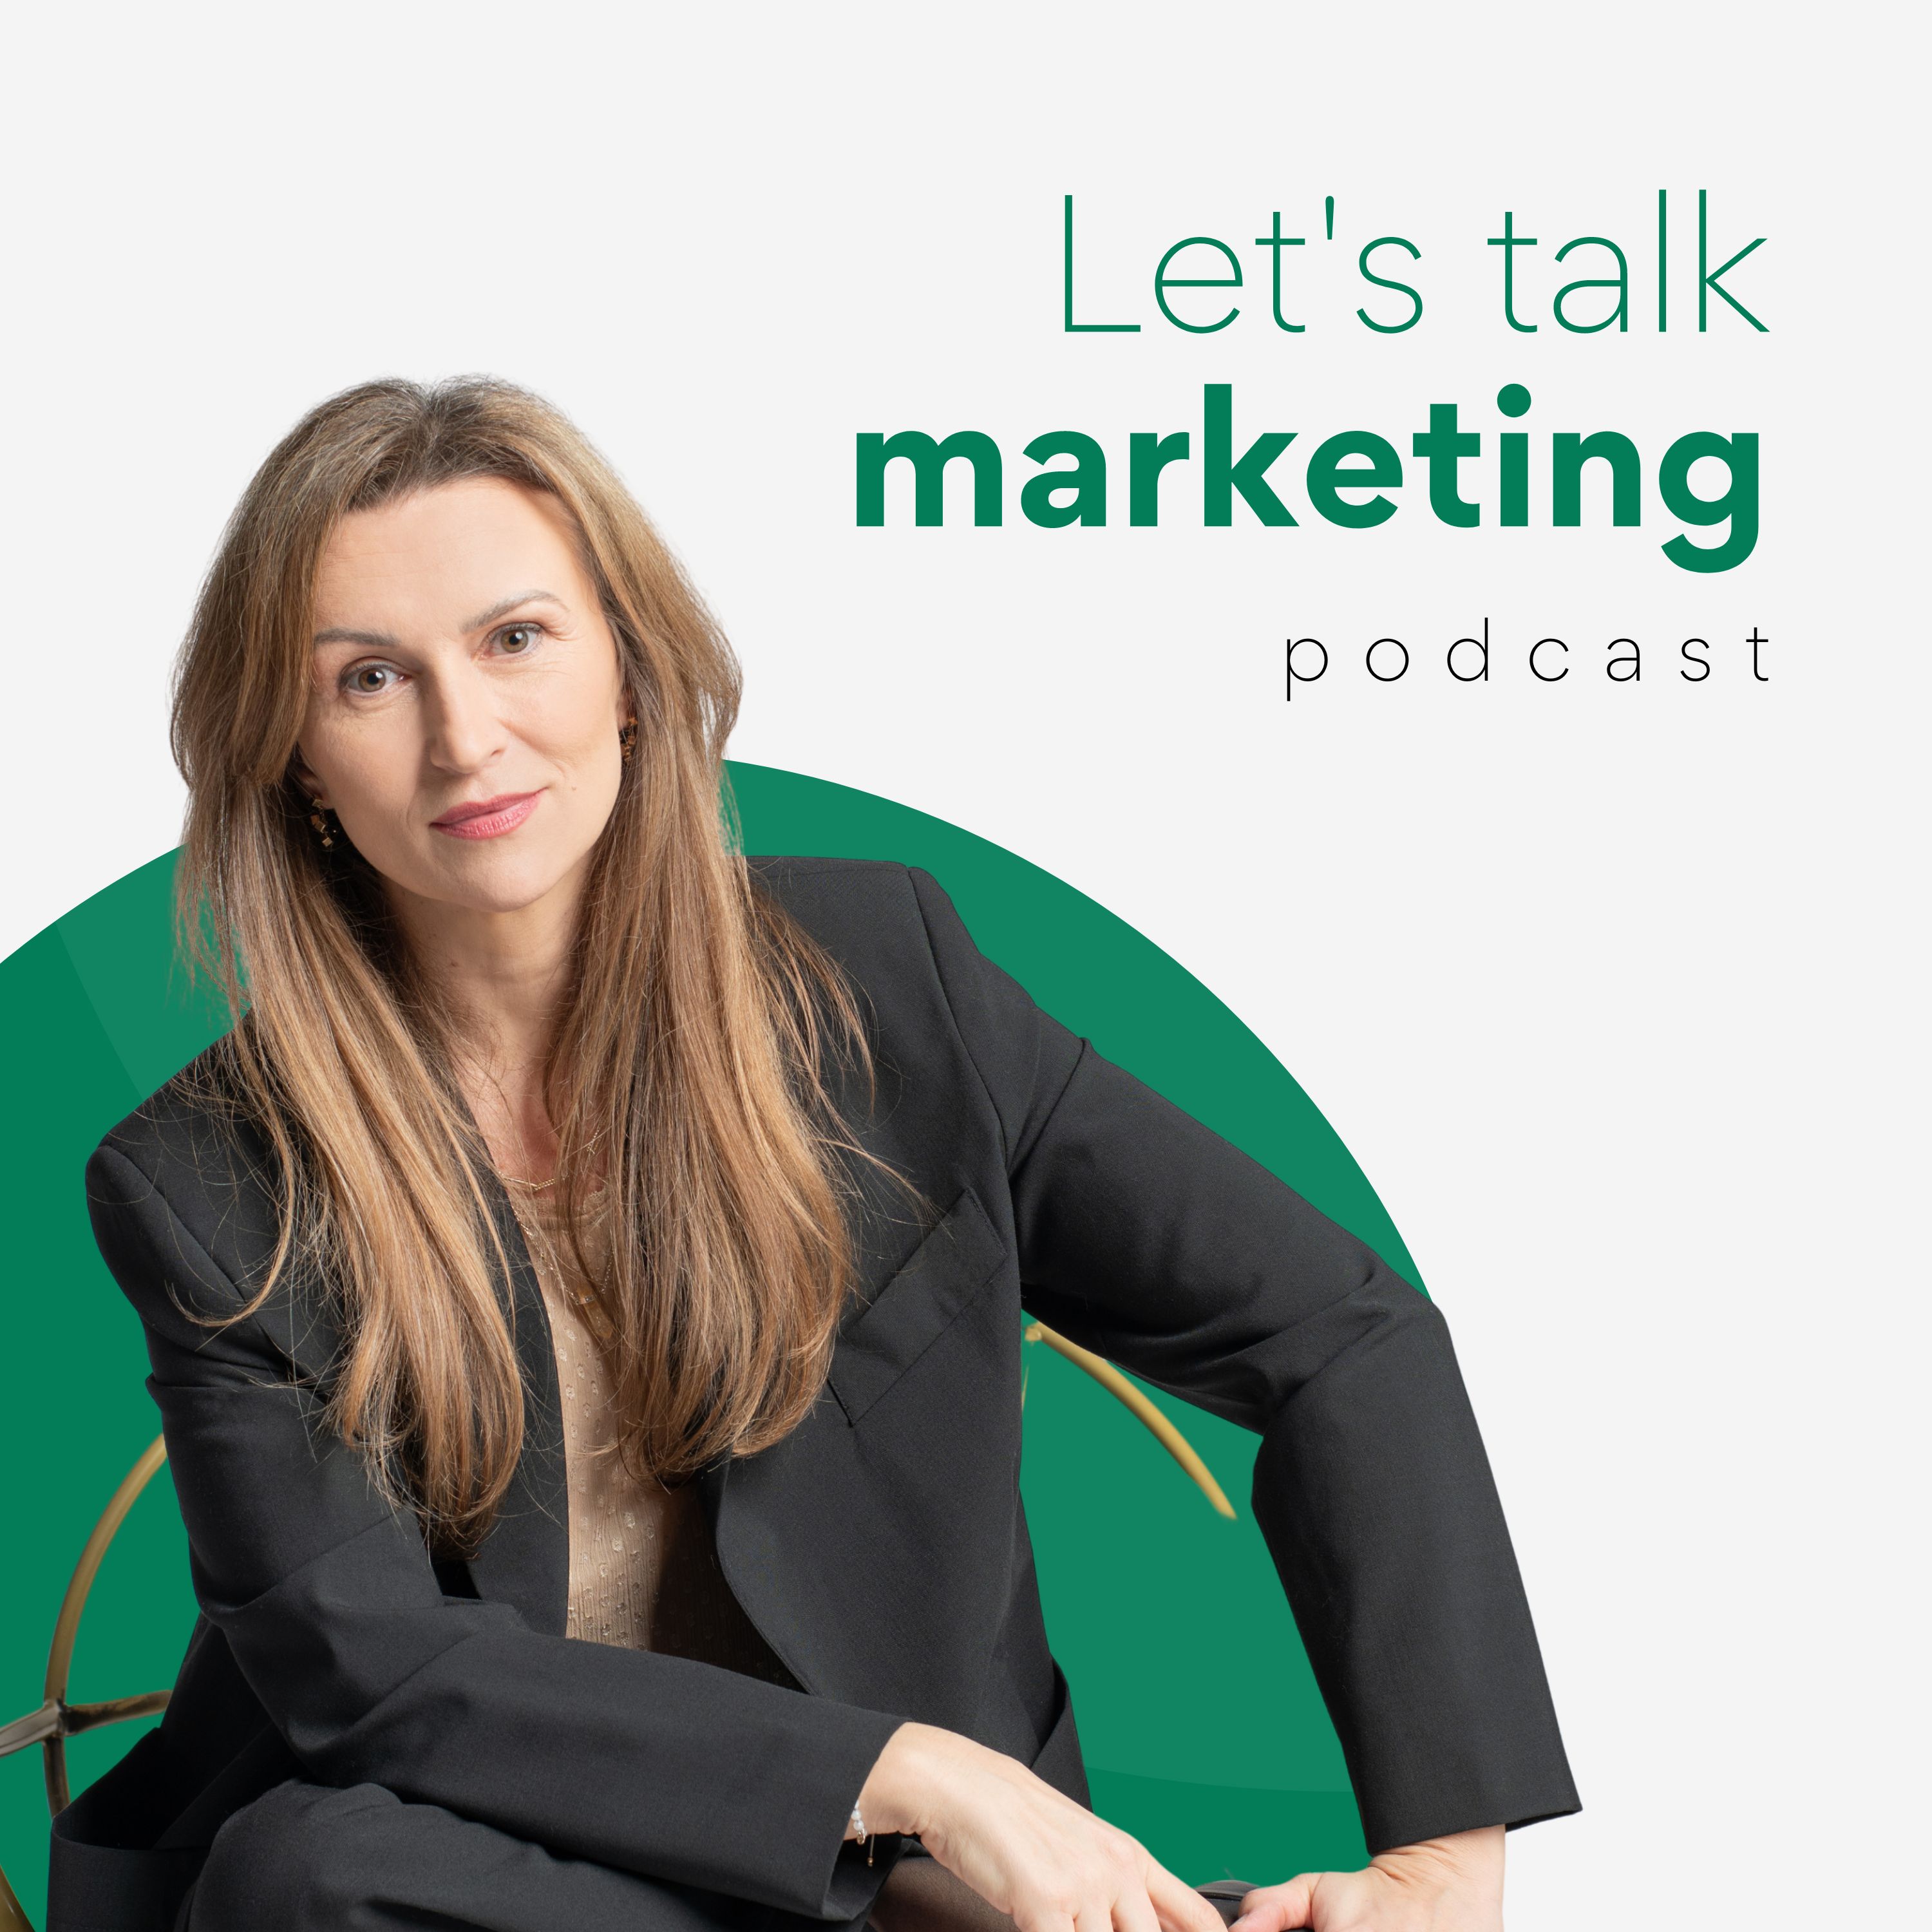 Podcast Let's talk marketing